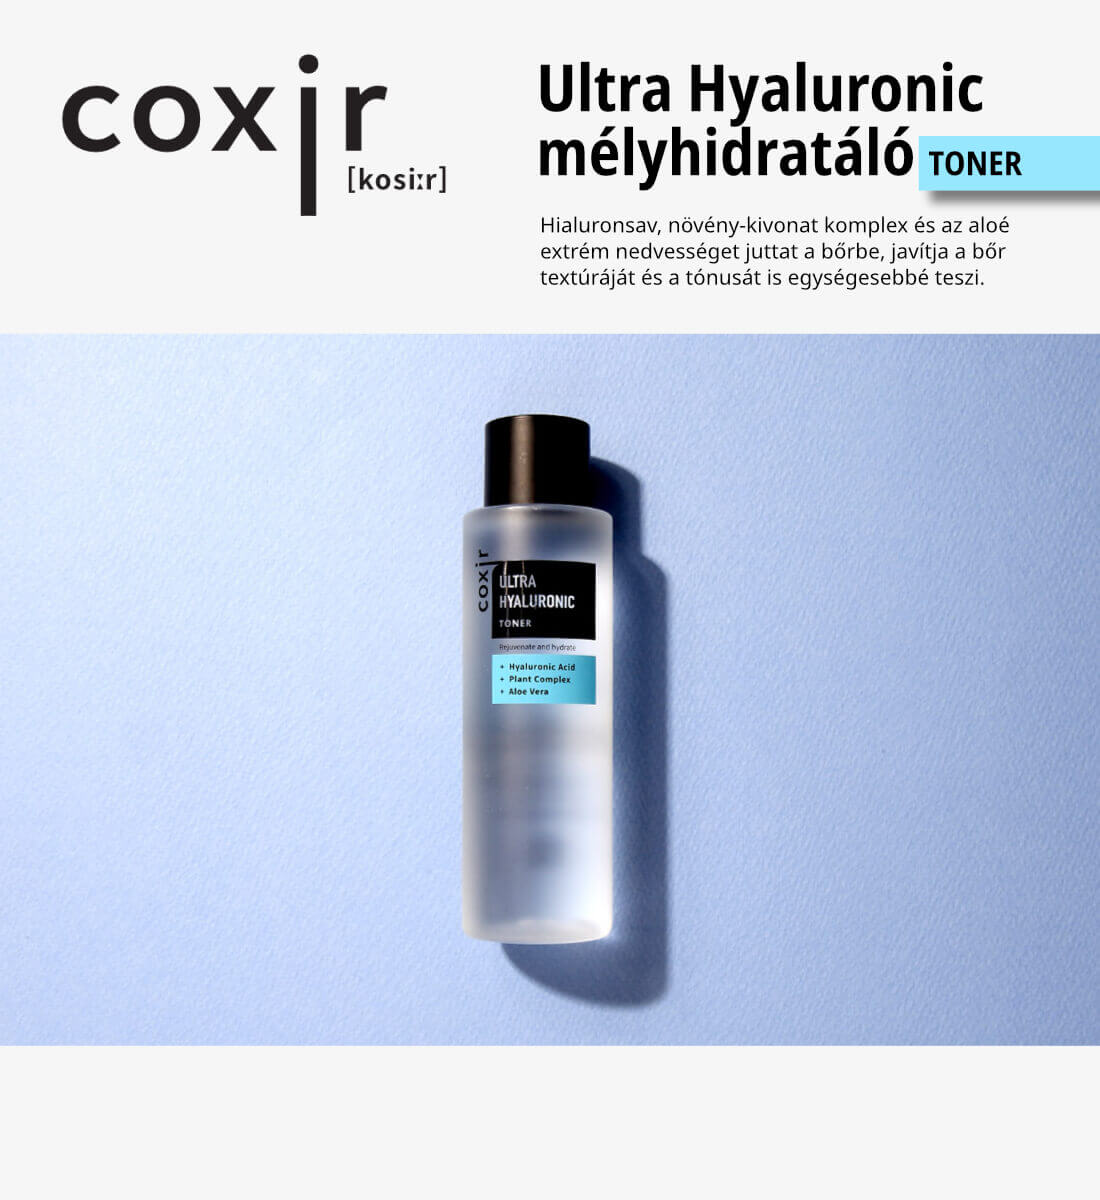 coxir-ultra-hyaluron-melyhidratalo-toner-leiras